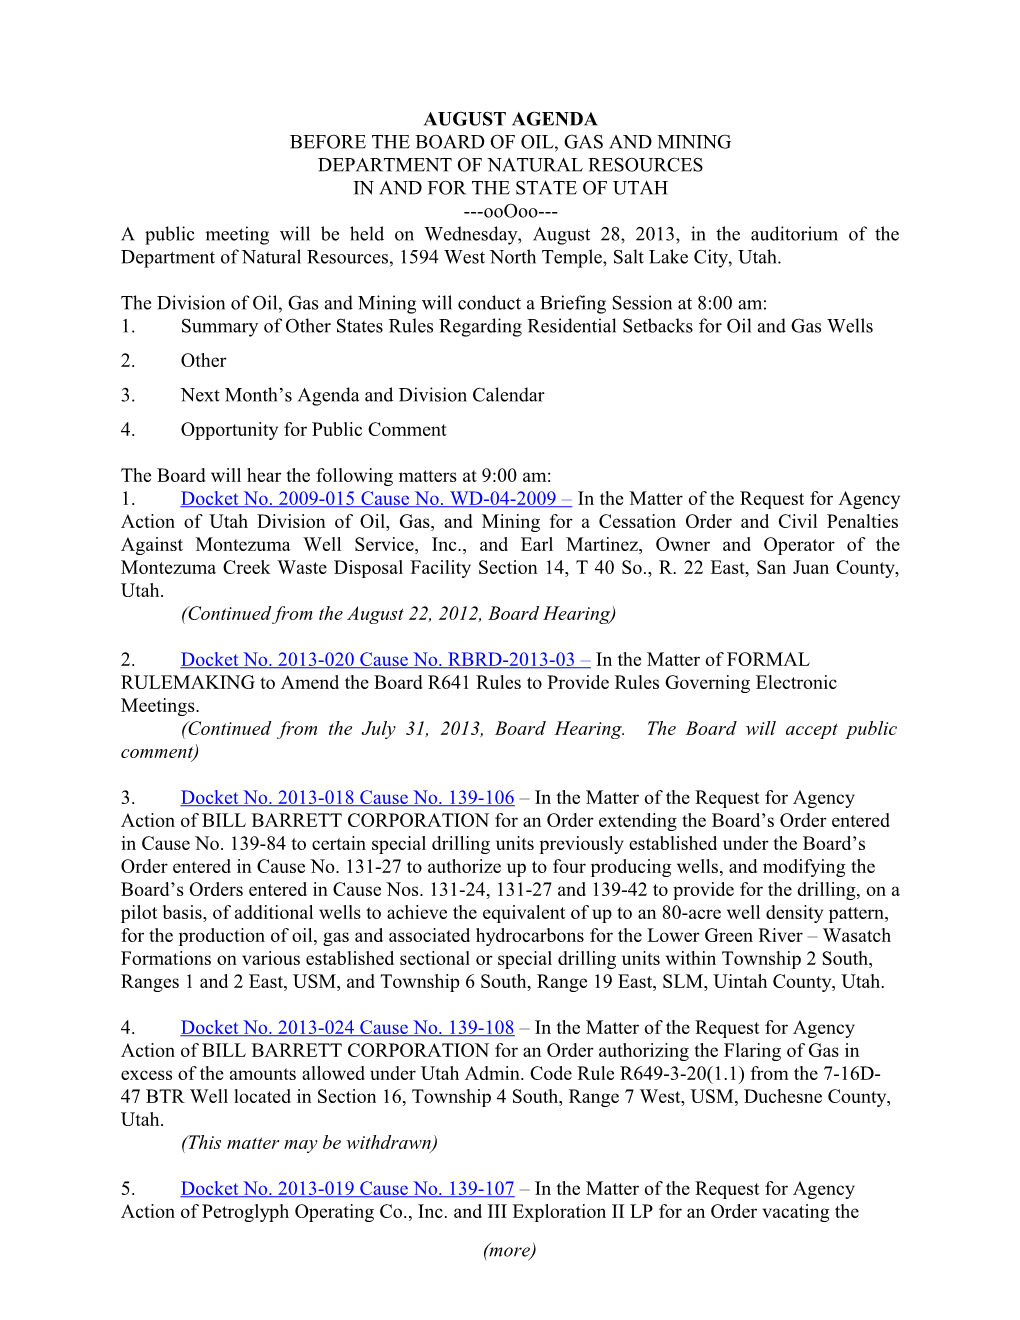 Board Agenda for August 24, 2011